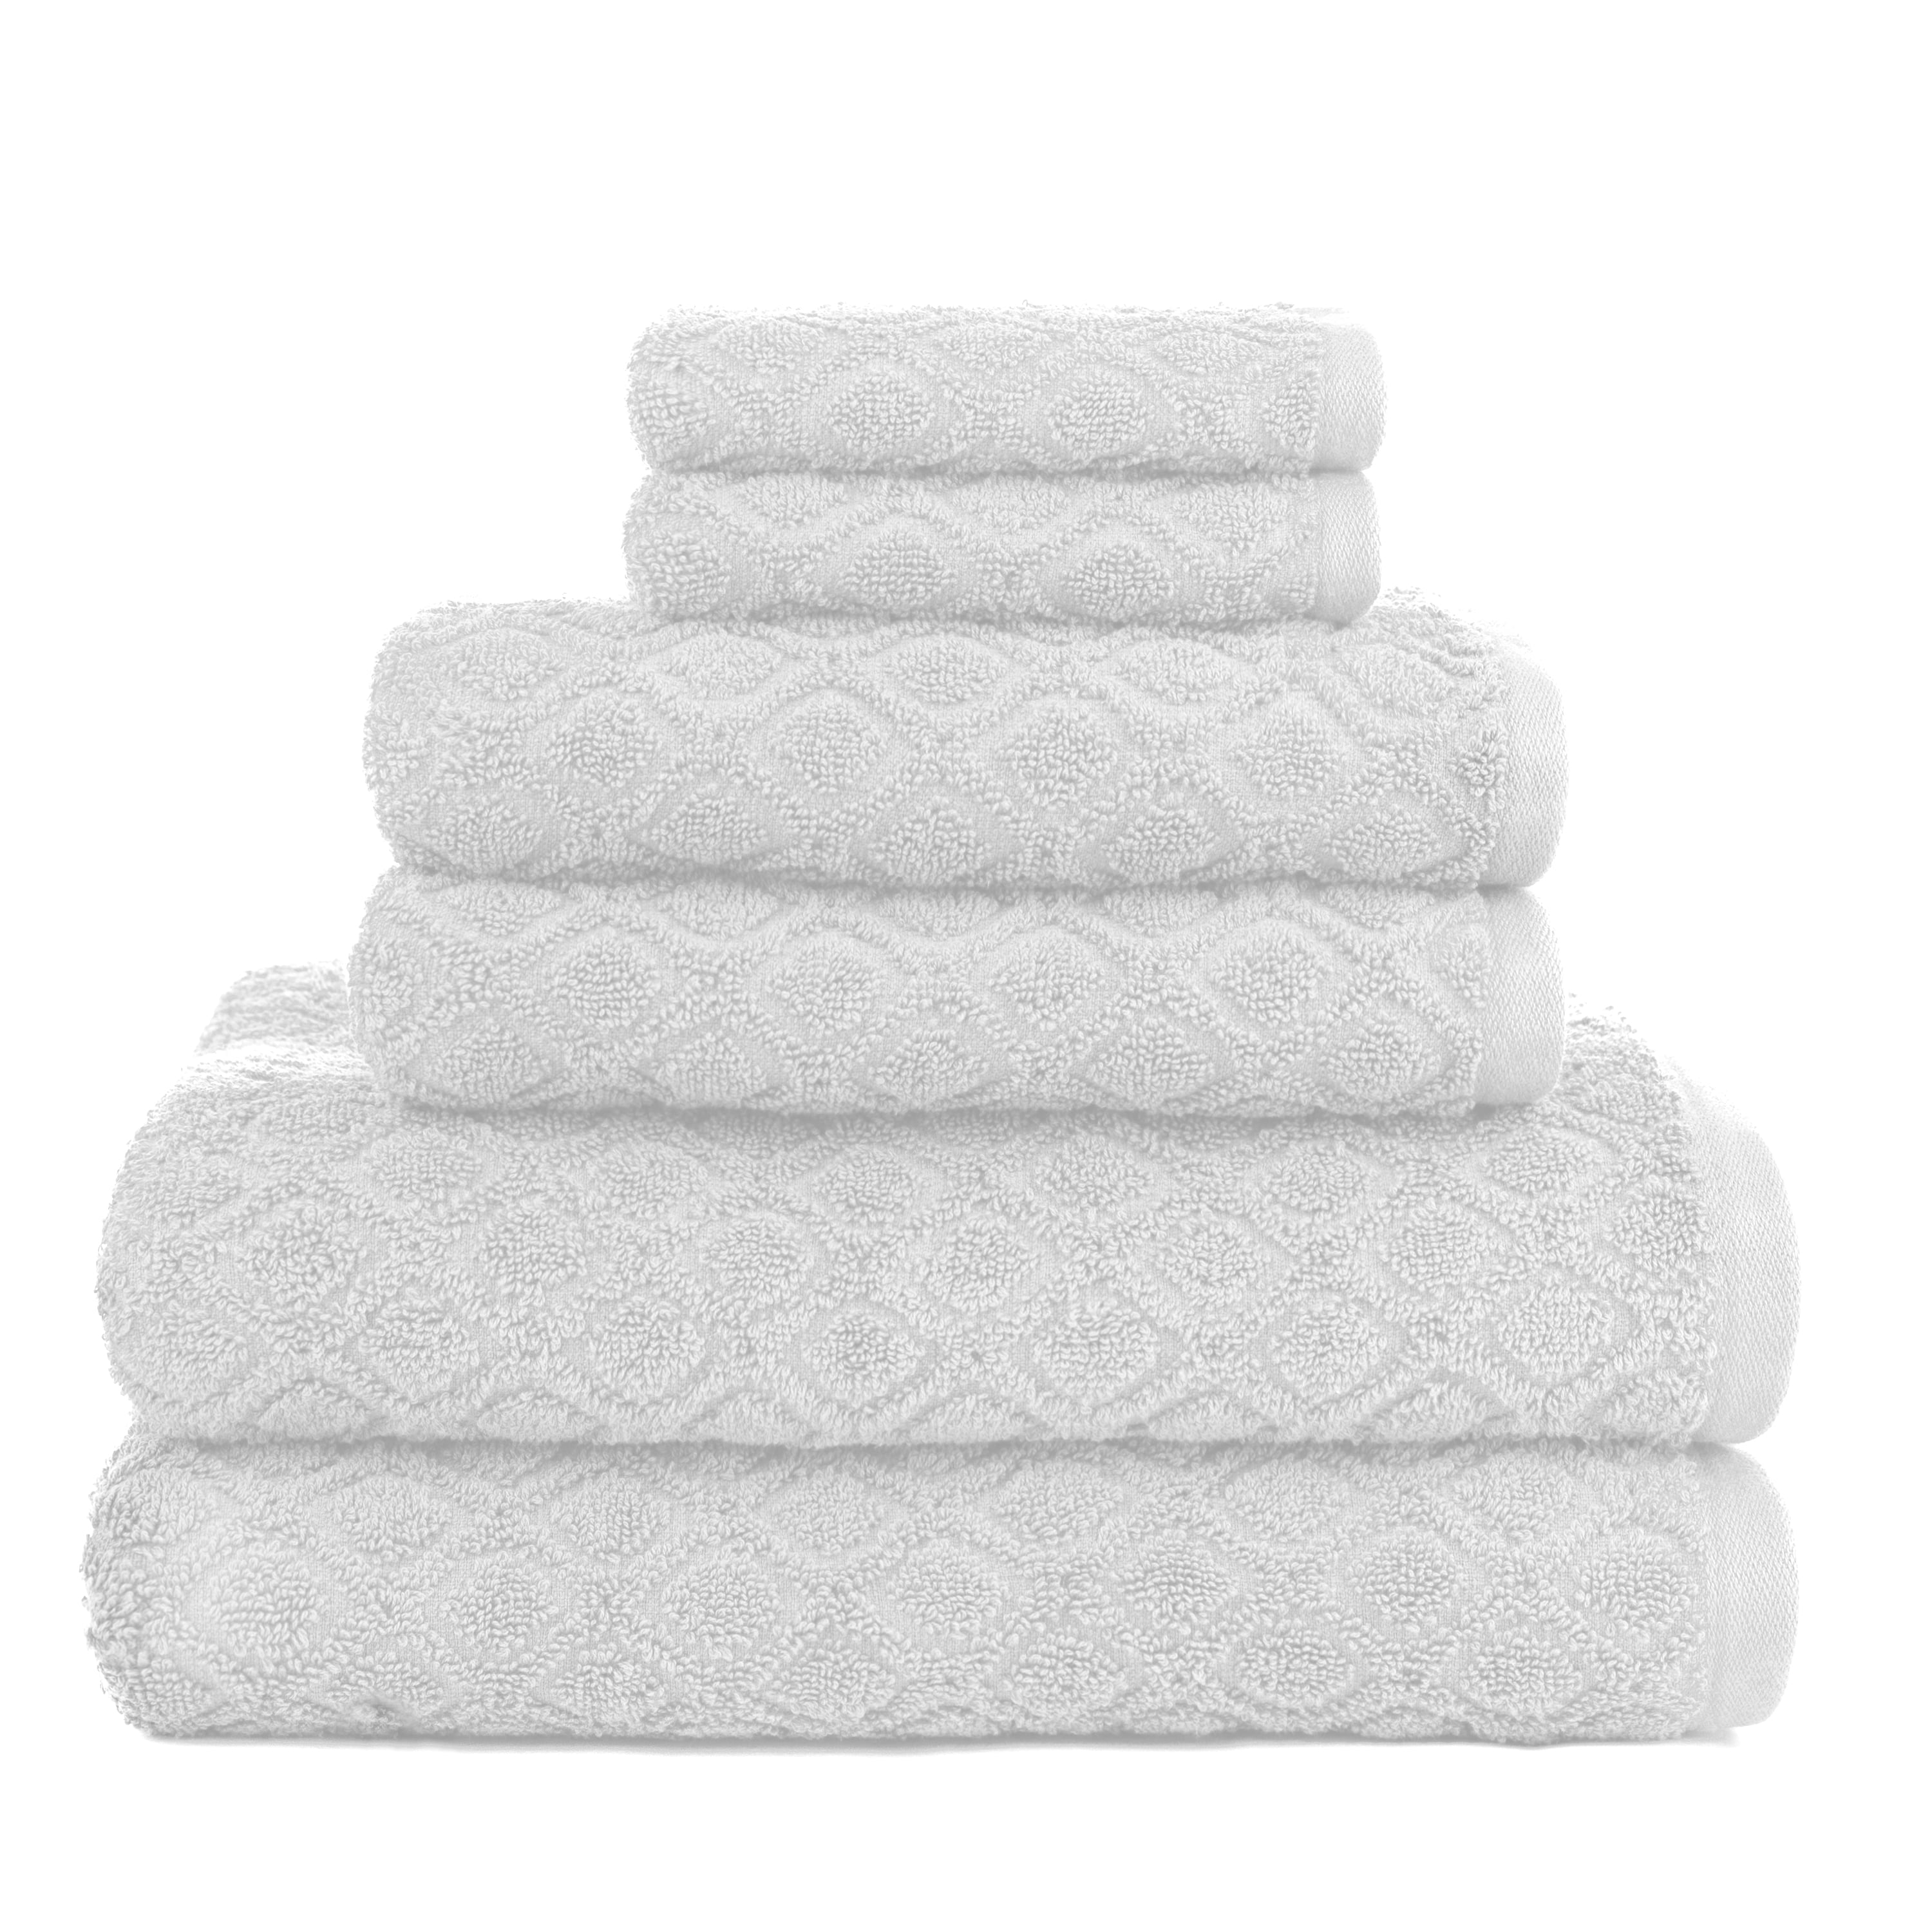 6 Piece Coolwater Textured Bath Towel Set Machine Washable Cotton Washcloths